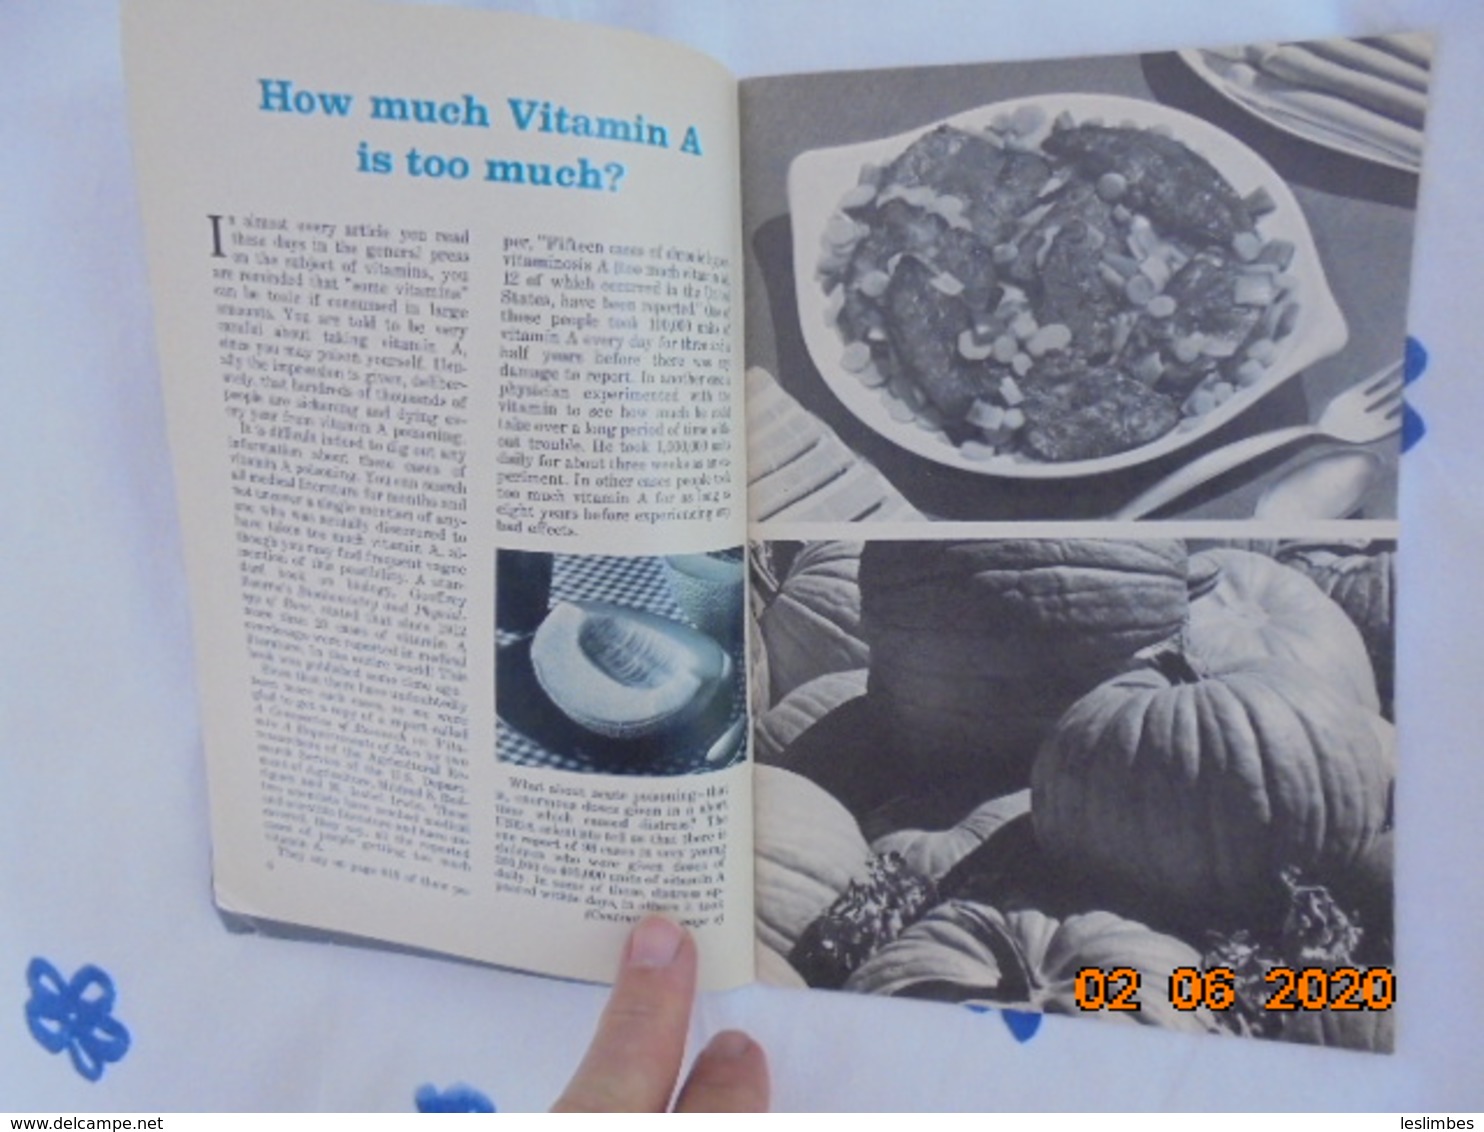 Today's Living, Volume 7 (April 1976) Number 4. Syndicate Magazines / Howard's Nutrition Of Newport Beach - Alternatieve Geneeskunde